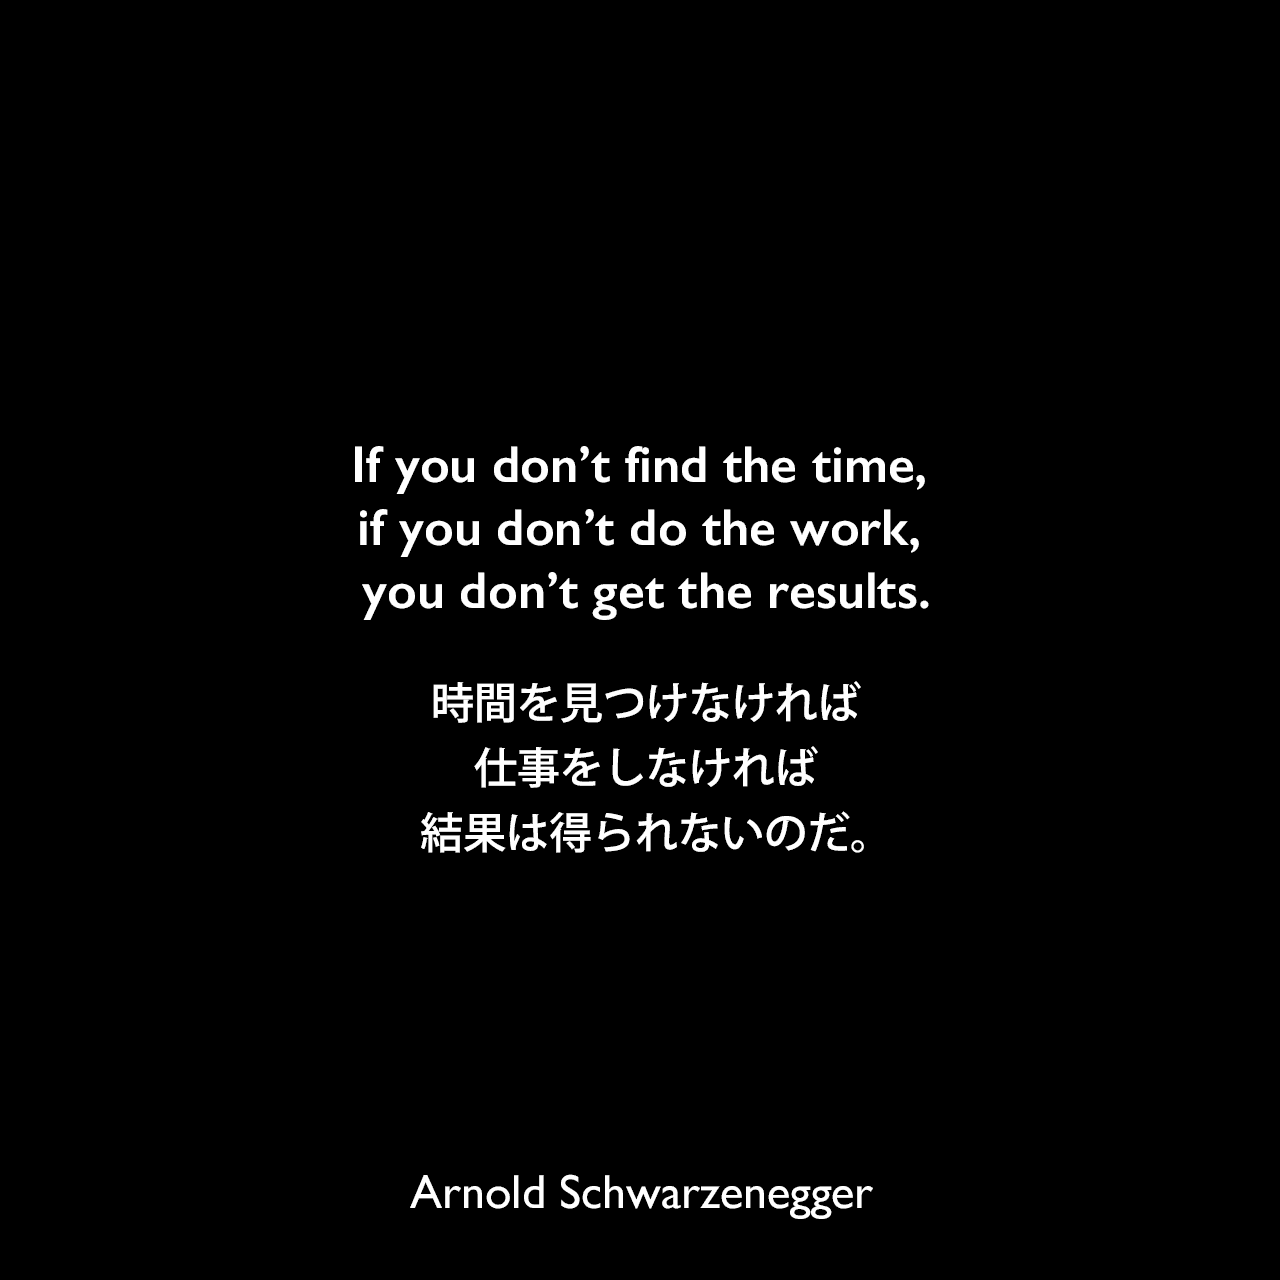 If you don’t find the time, if you don’t do the work, you don’t get the results.時間を見つけなければ、仕事をしなければ、結果は得られないのだ。Arnold Schwarzenegger